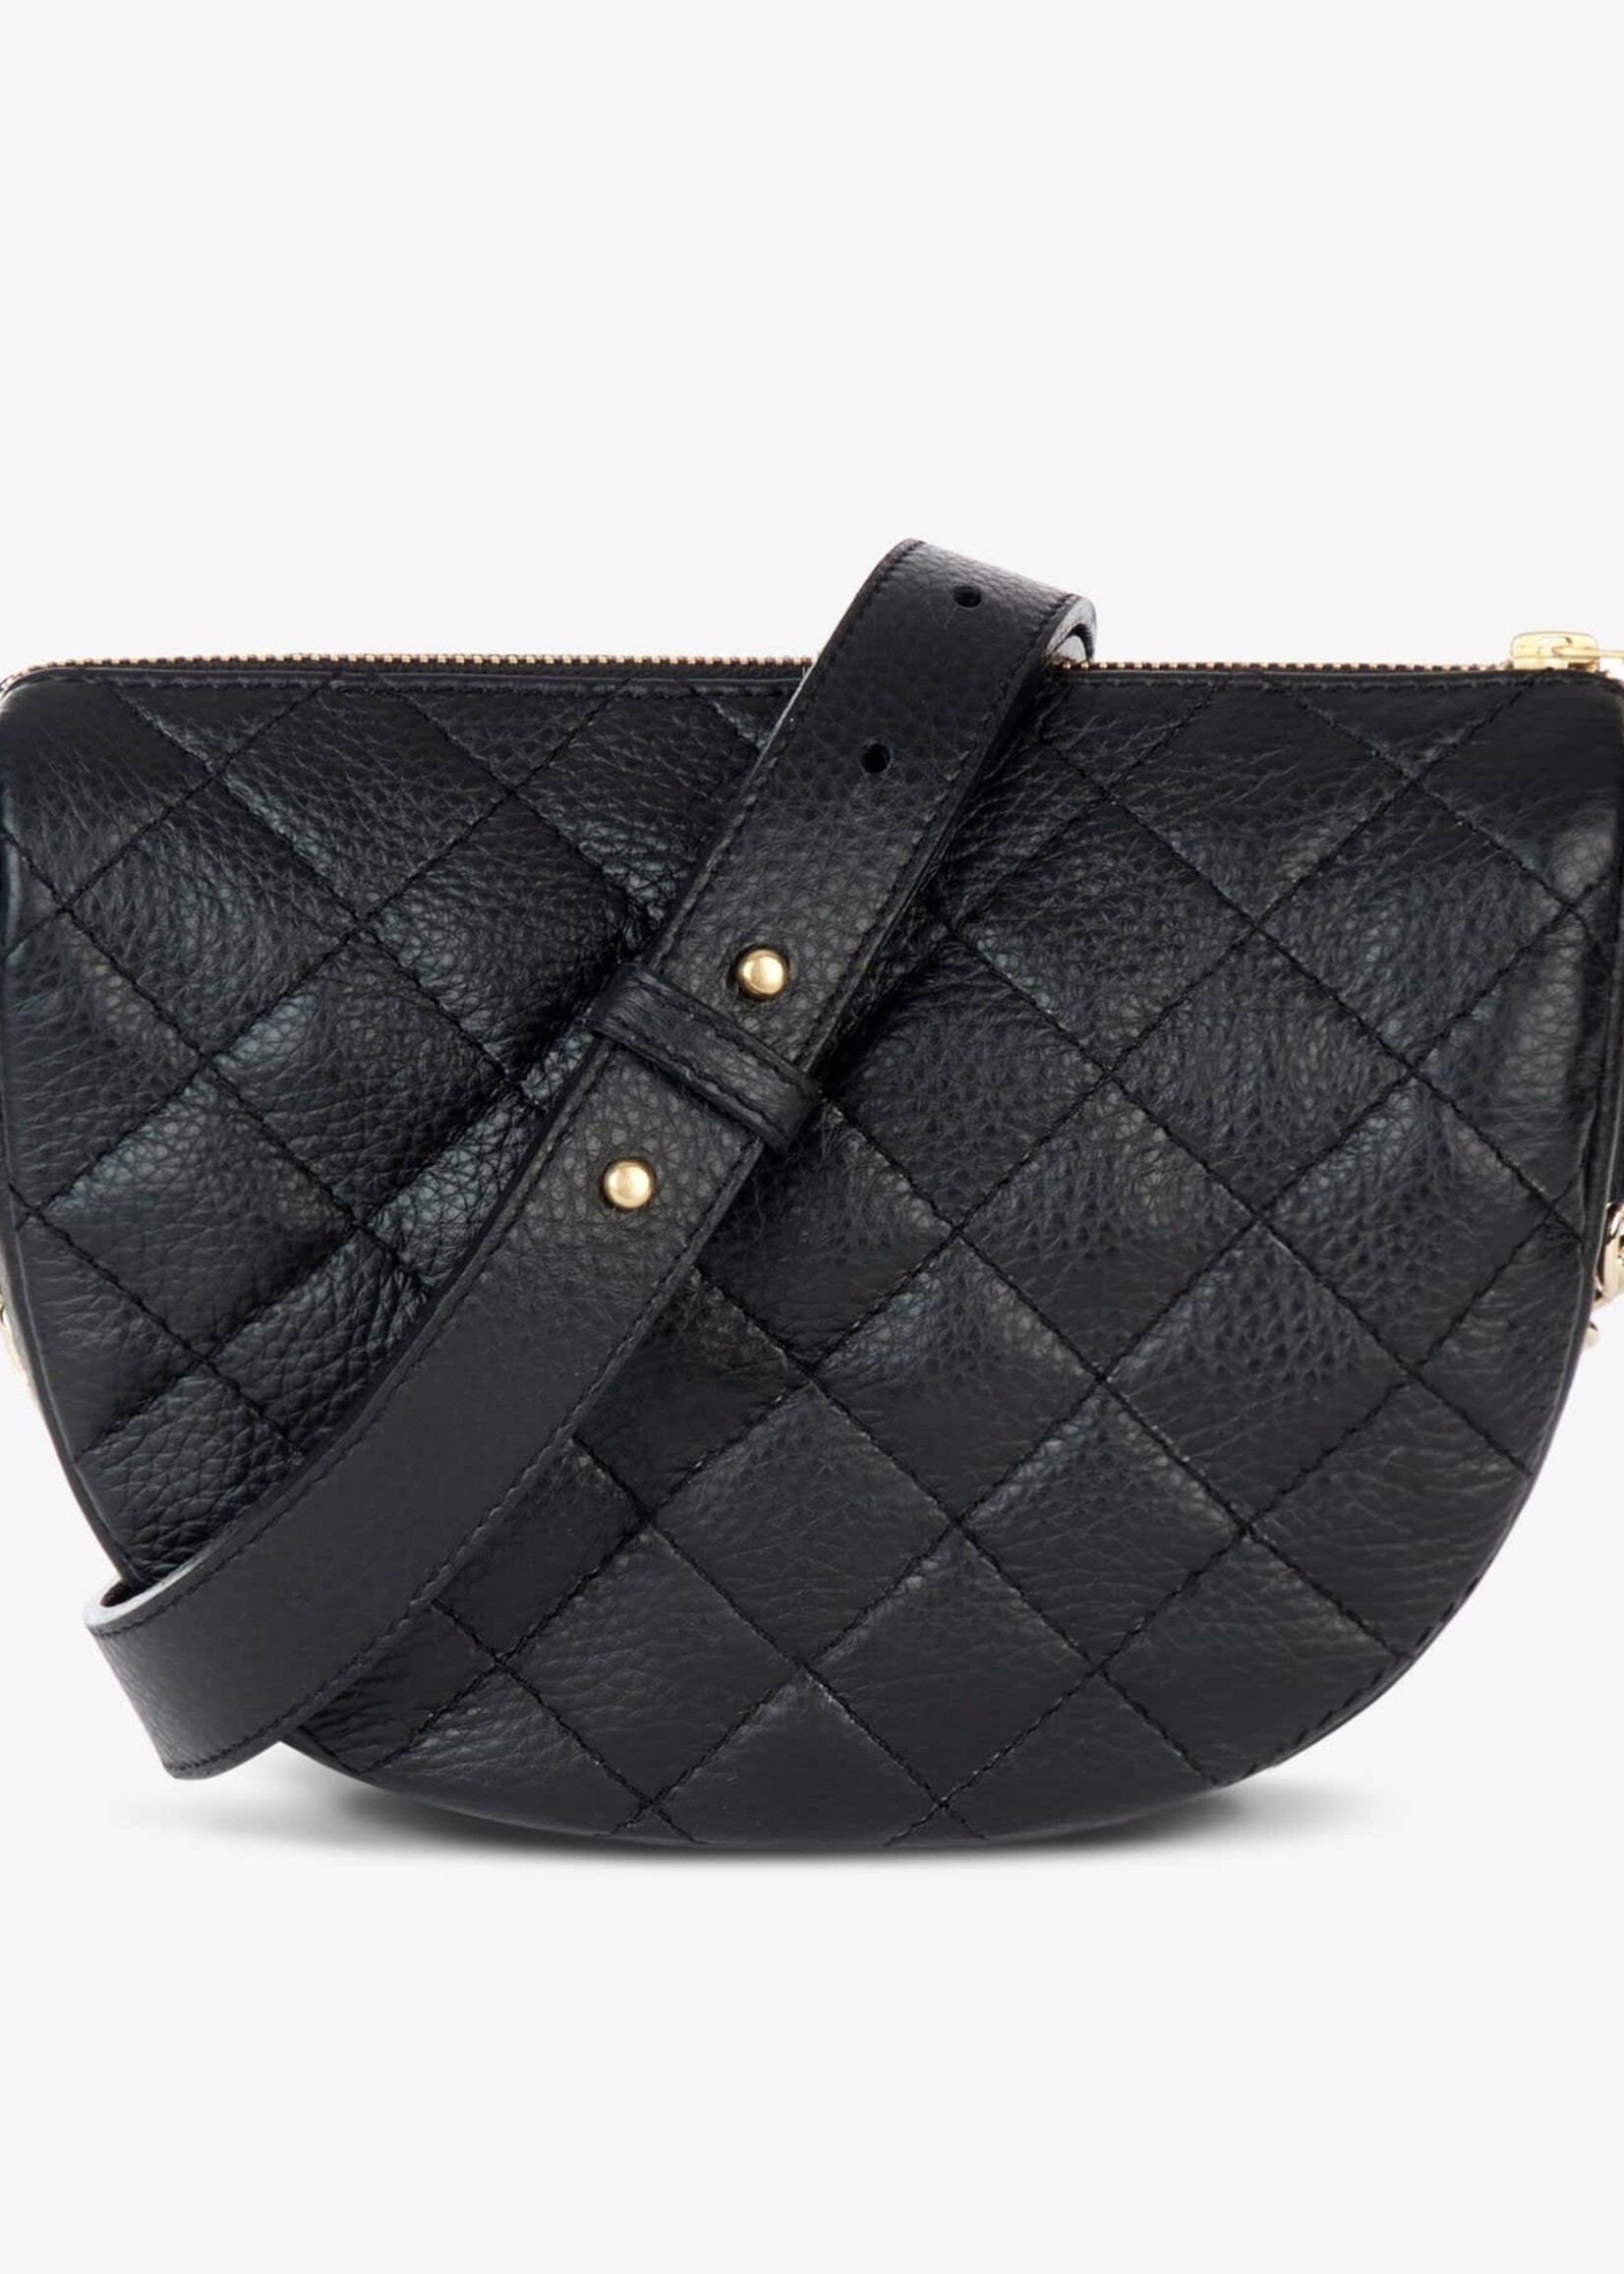 BRAVE LEATHER DAVINA leather purse